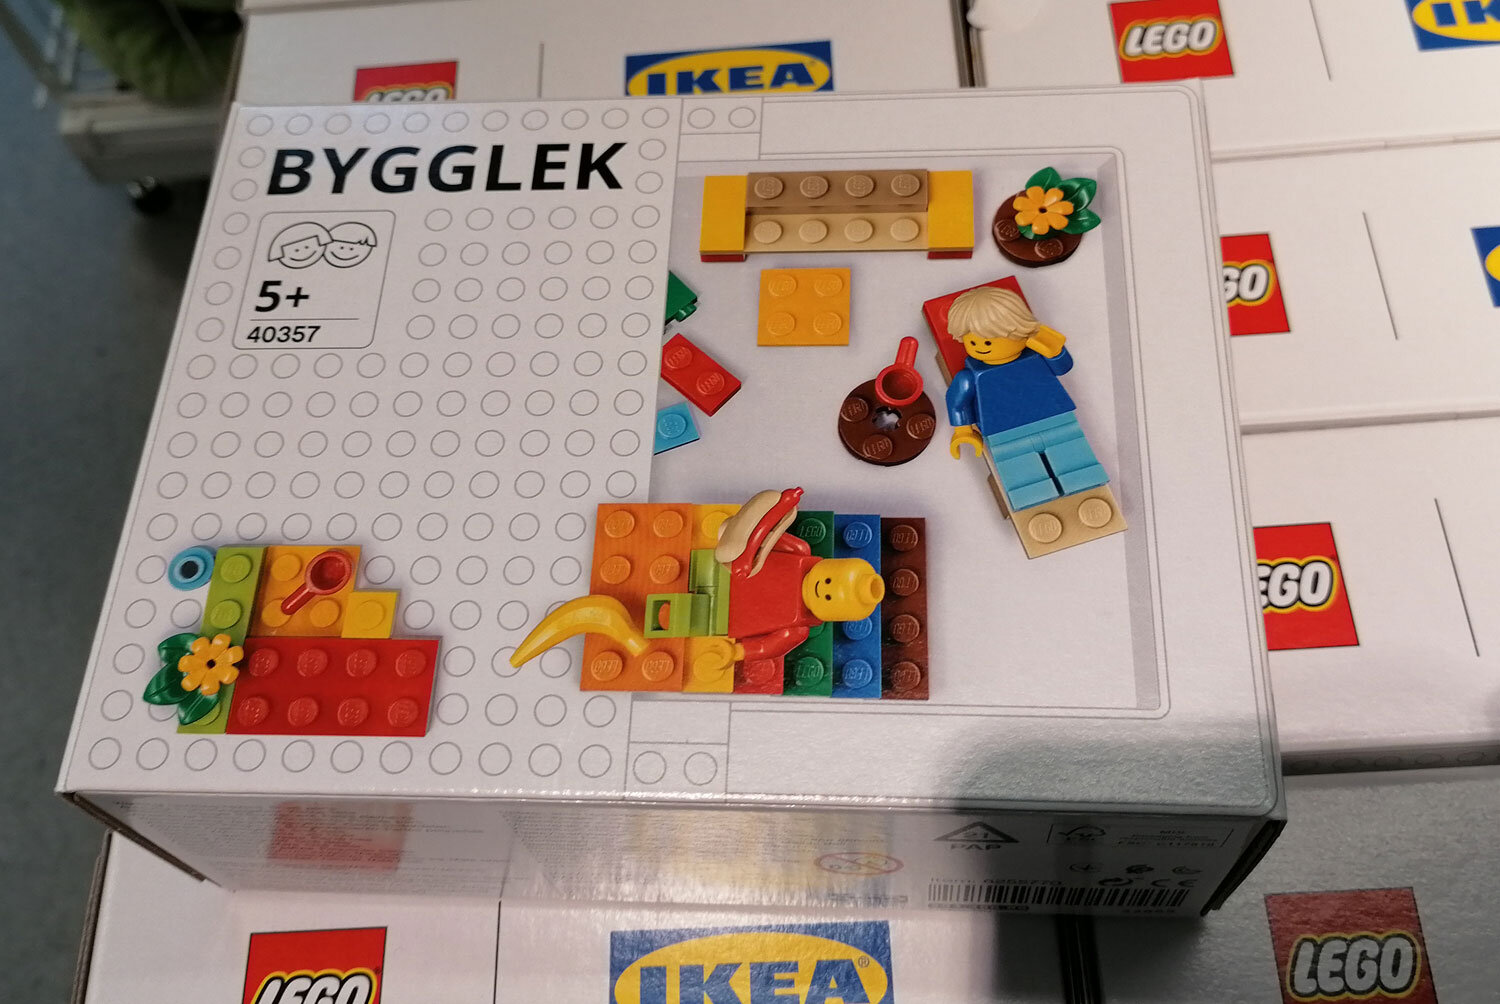 lego-ikea-bygglek-brickfinder-07.jpg